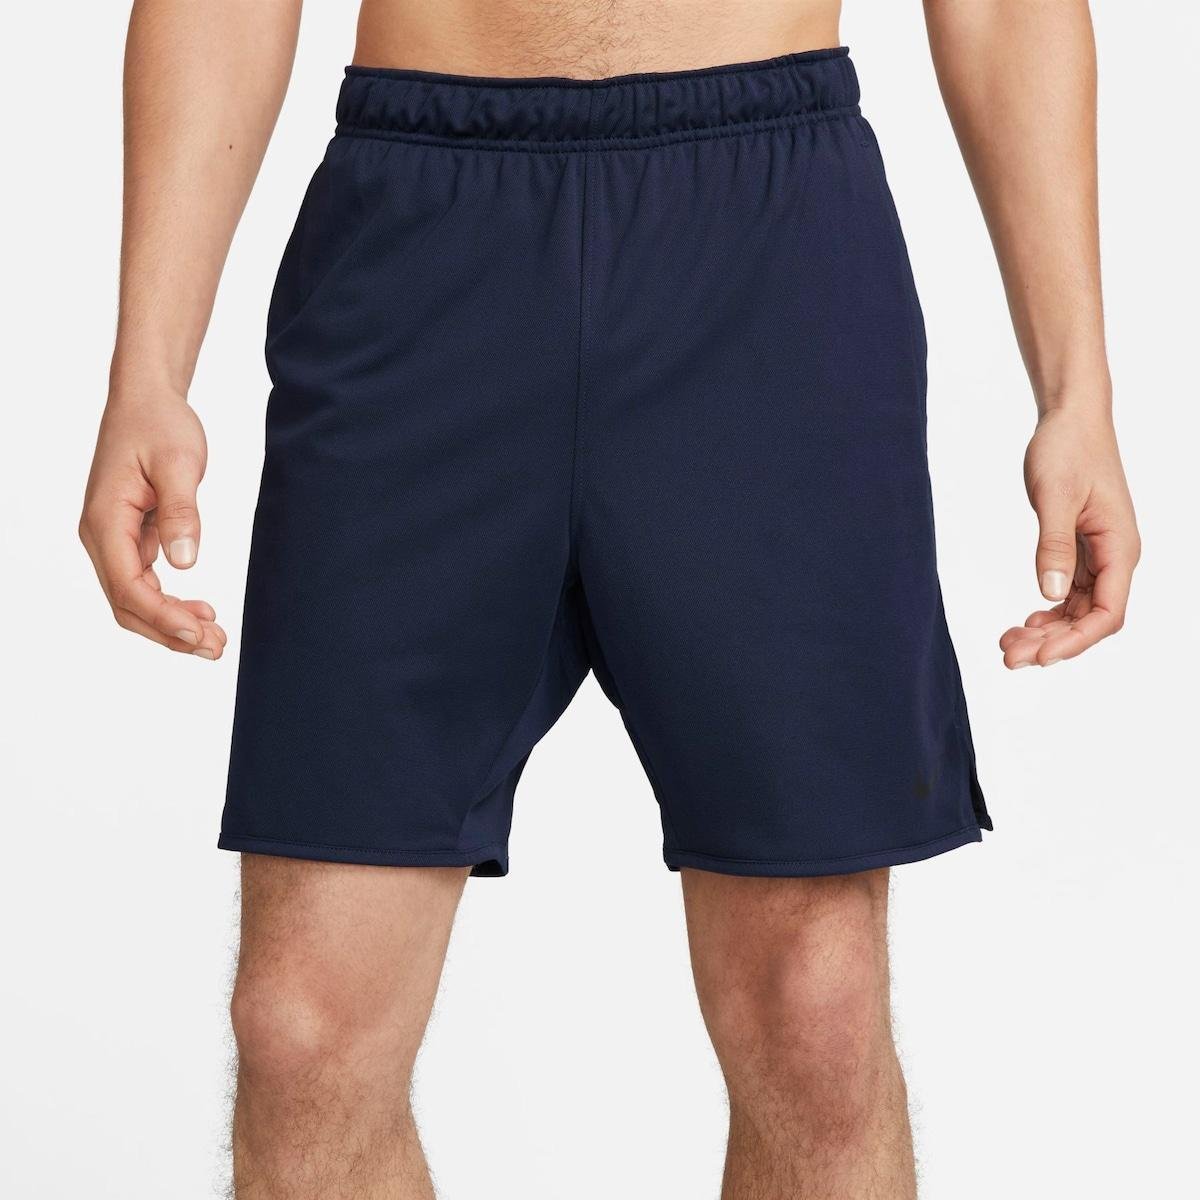 Shorts Nike Dri-FIT Totality Knit - Masculino